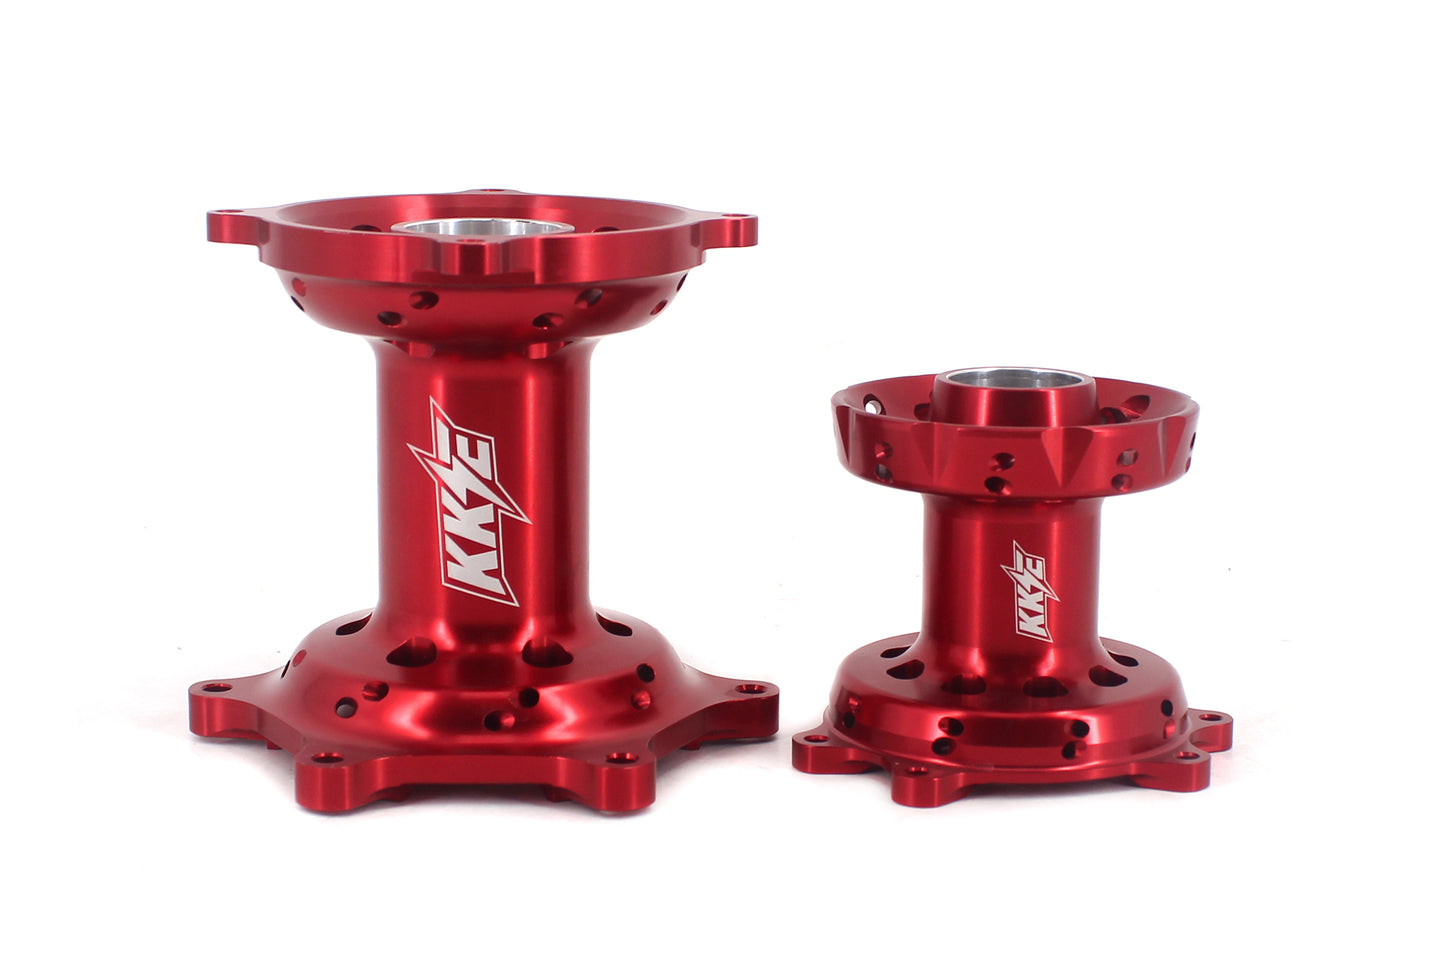 KKE OEM Size Front Rear Red Wheel Hub For Honda CRF250R 2014-2024 CRF450R 2013-2024